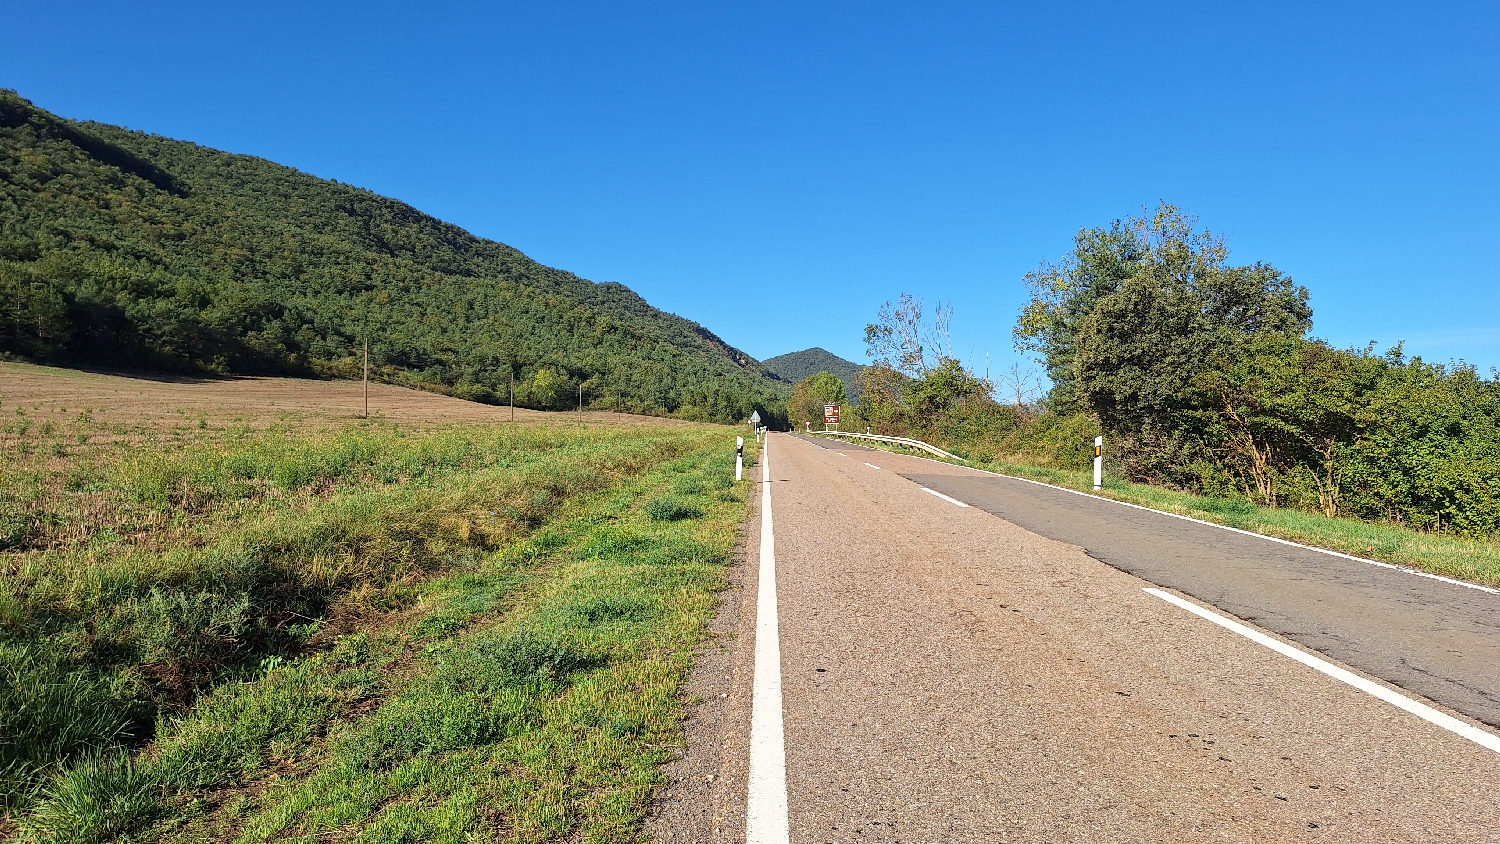 El Camino, Aragon Út, országút